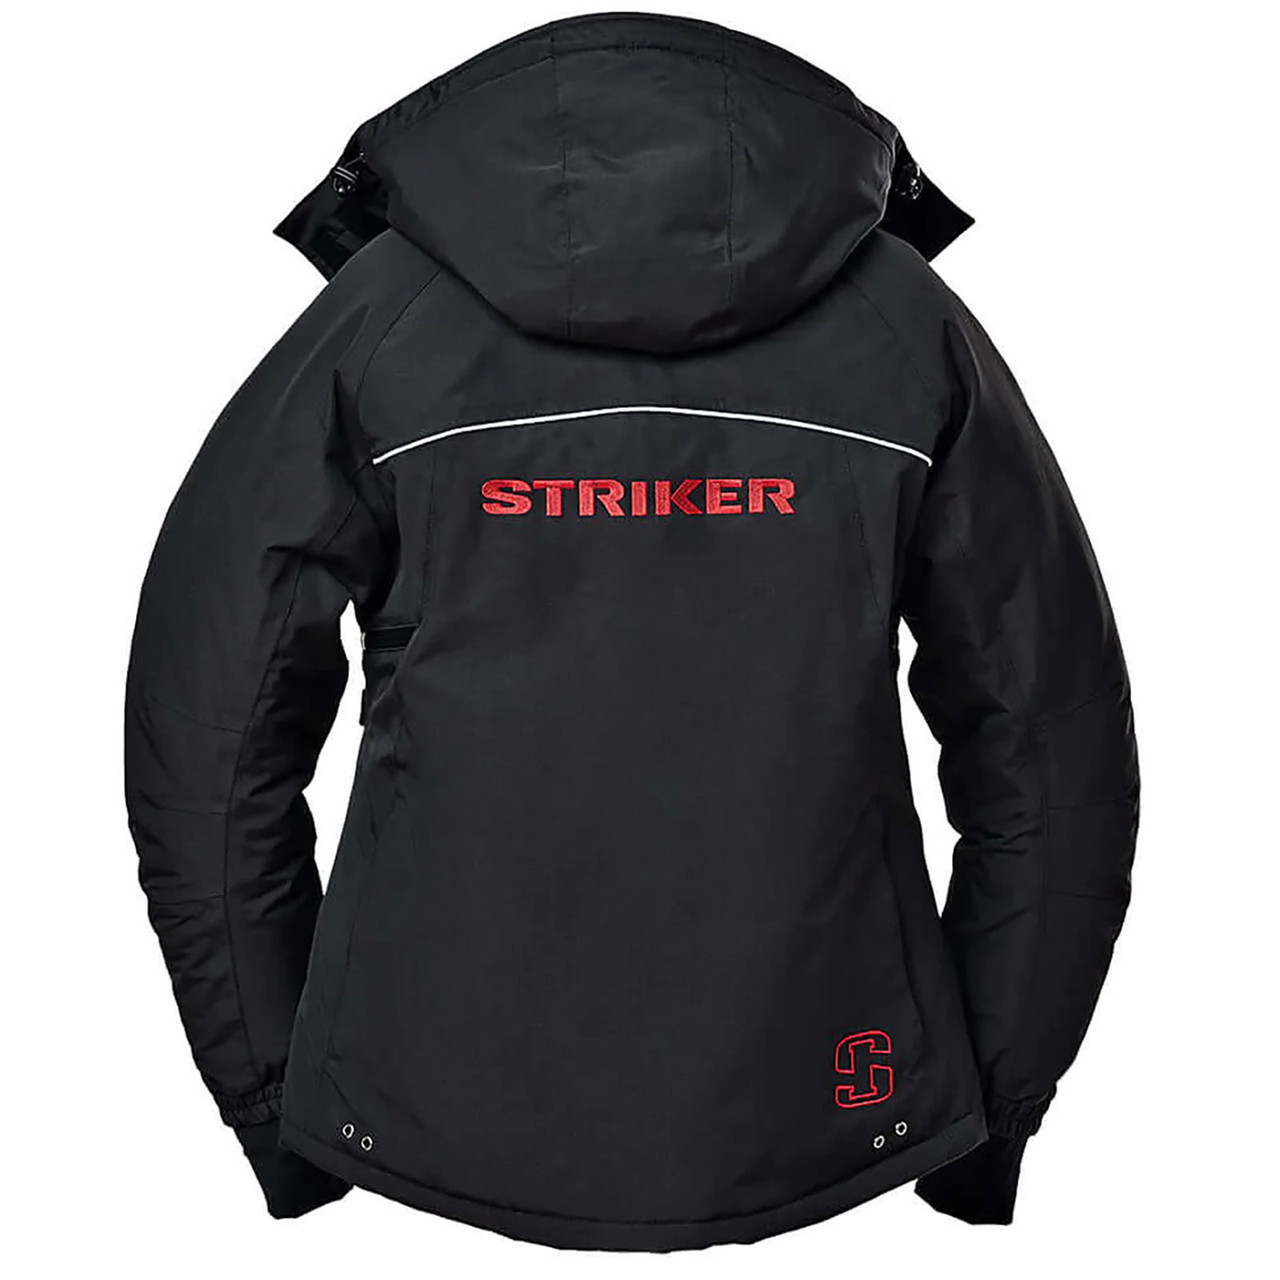 Striker Women's Prism Jacket, XS, Black